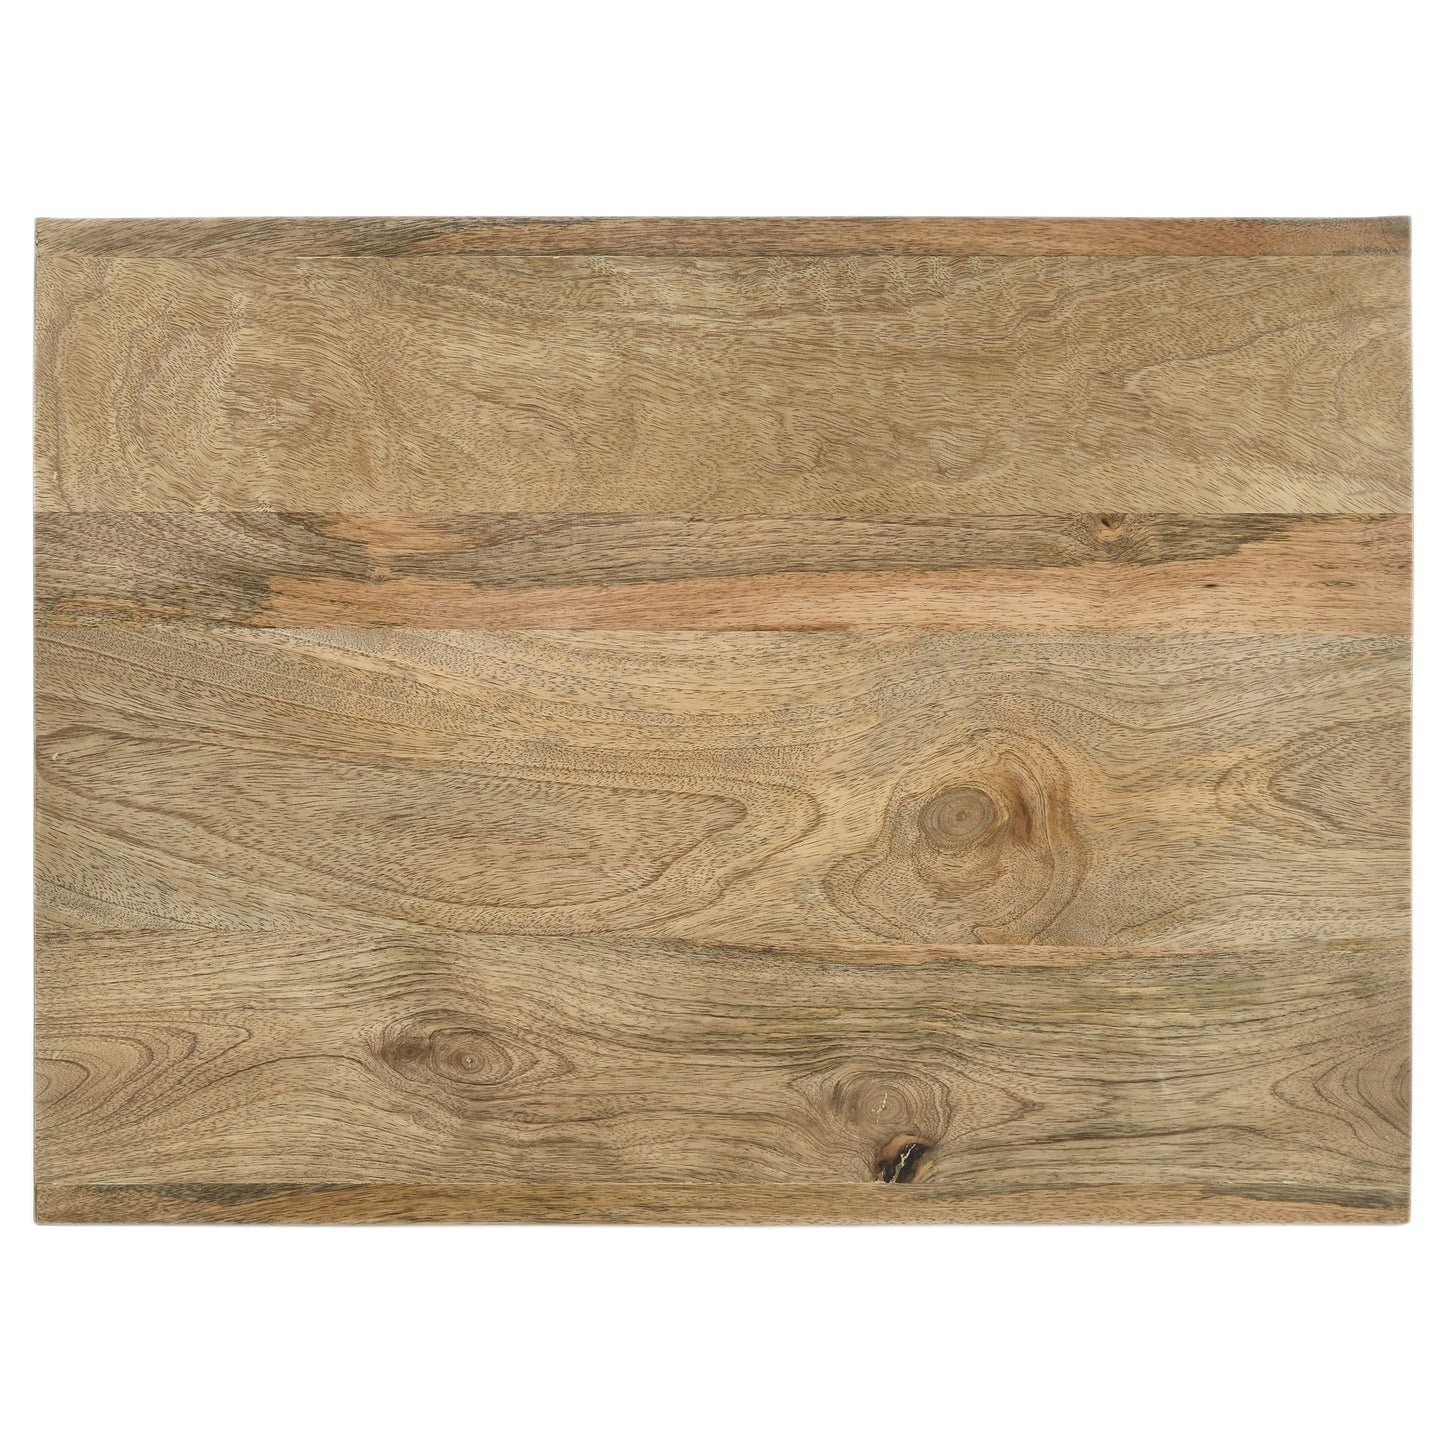 Benton Rectangular Solid Wood End Table Natural